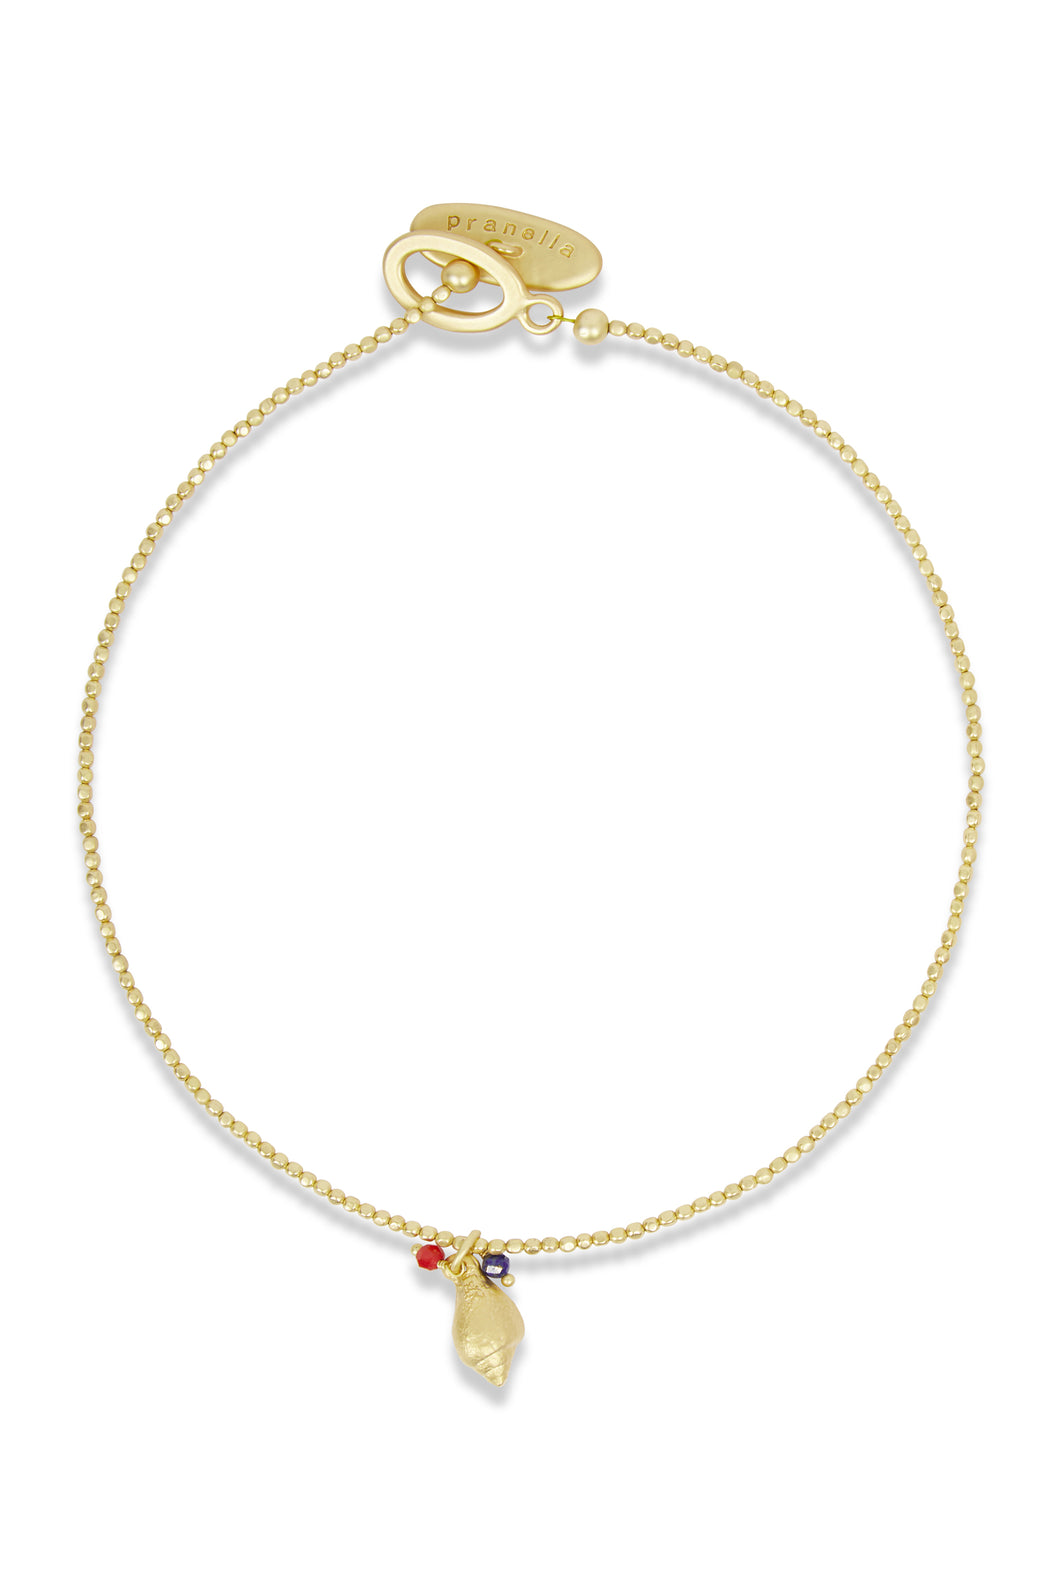 Pranella Tildy Gold Shell Short Necklace